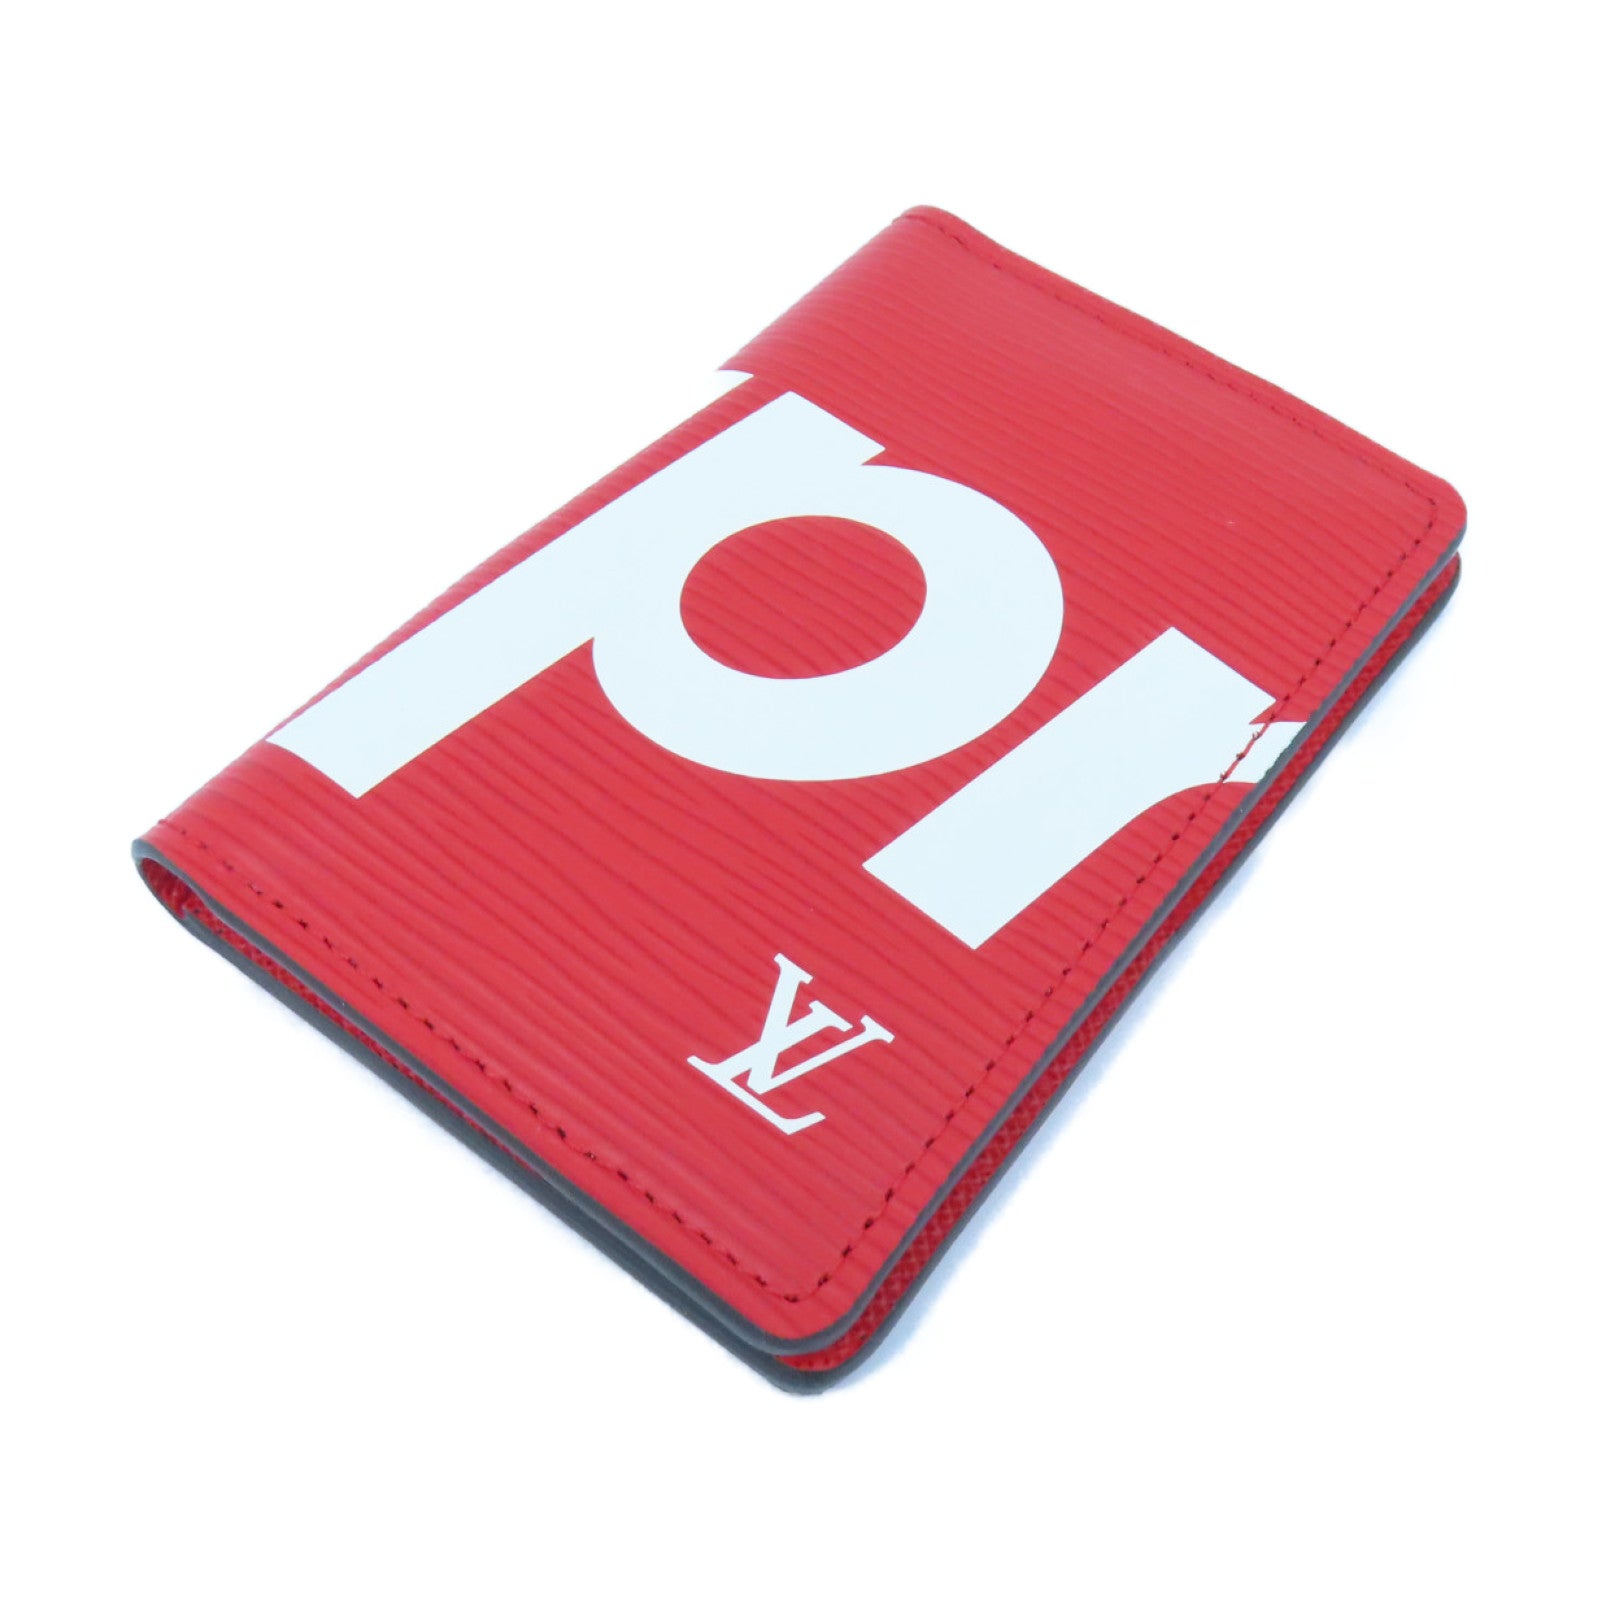 Louis Vuitton x Supreme Pocket Organizer Epi Red